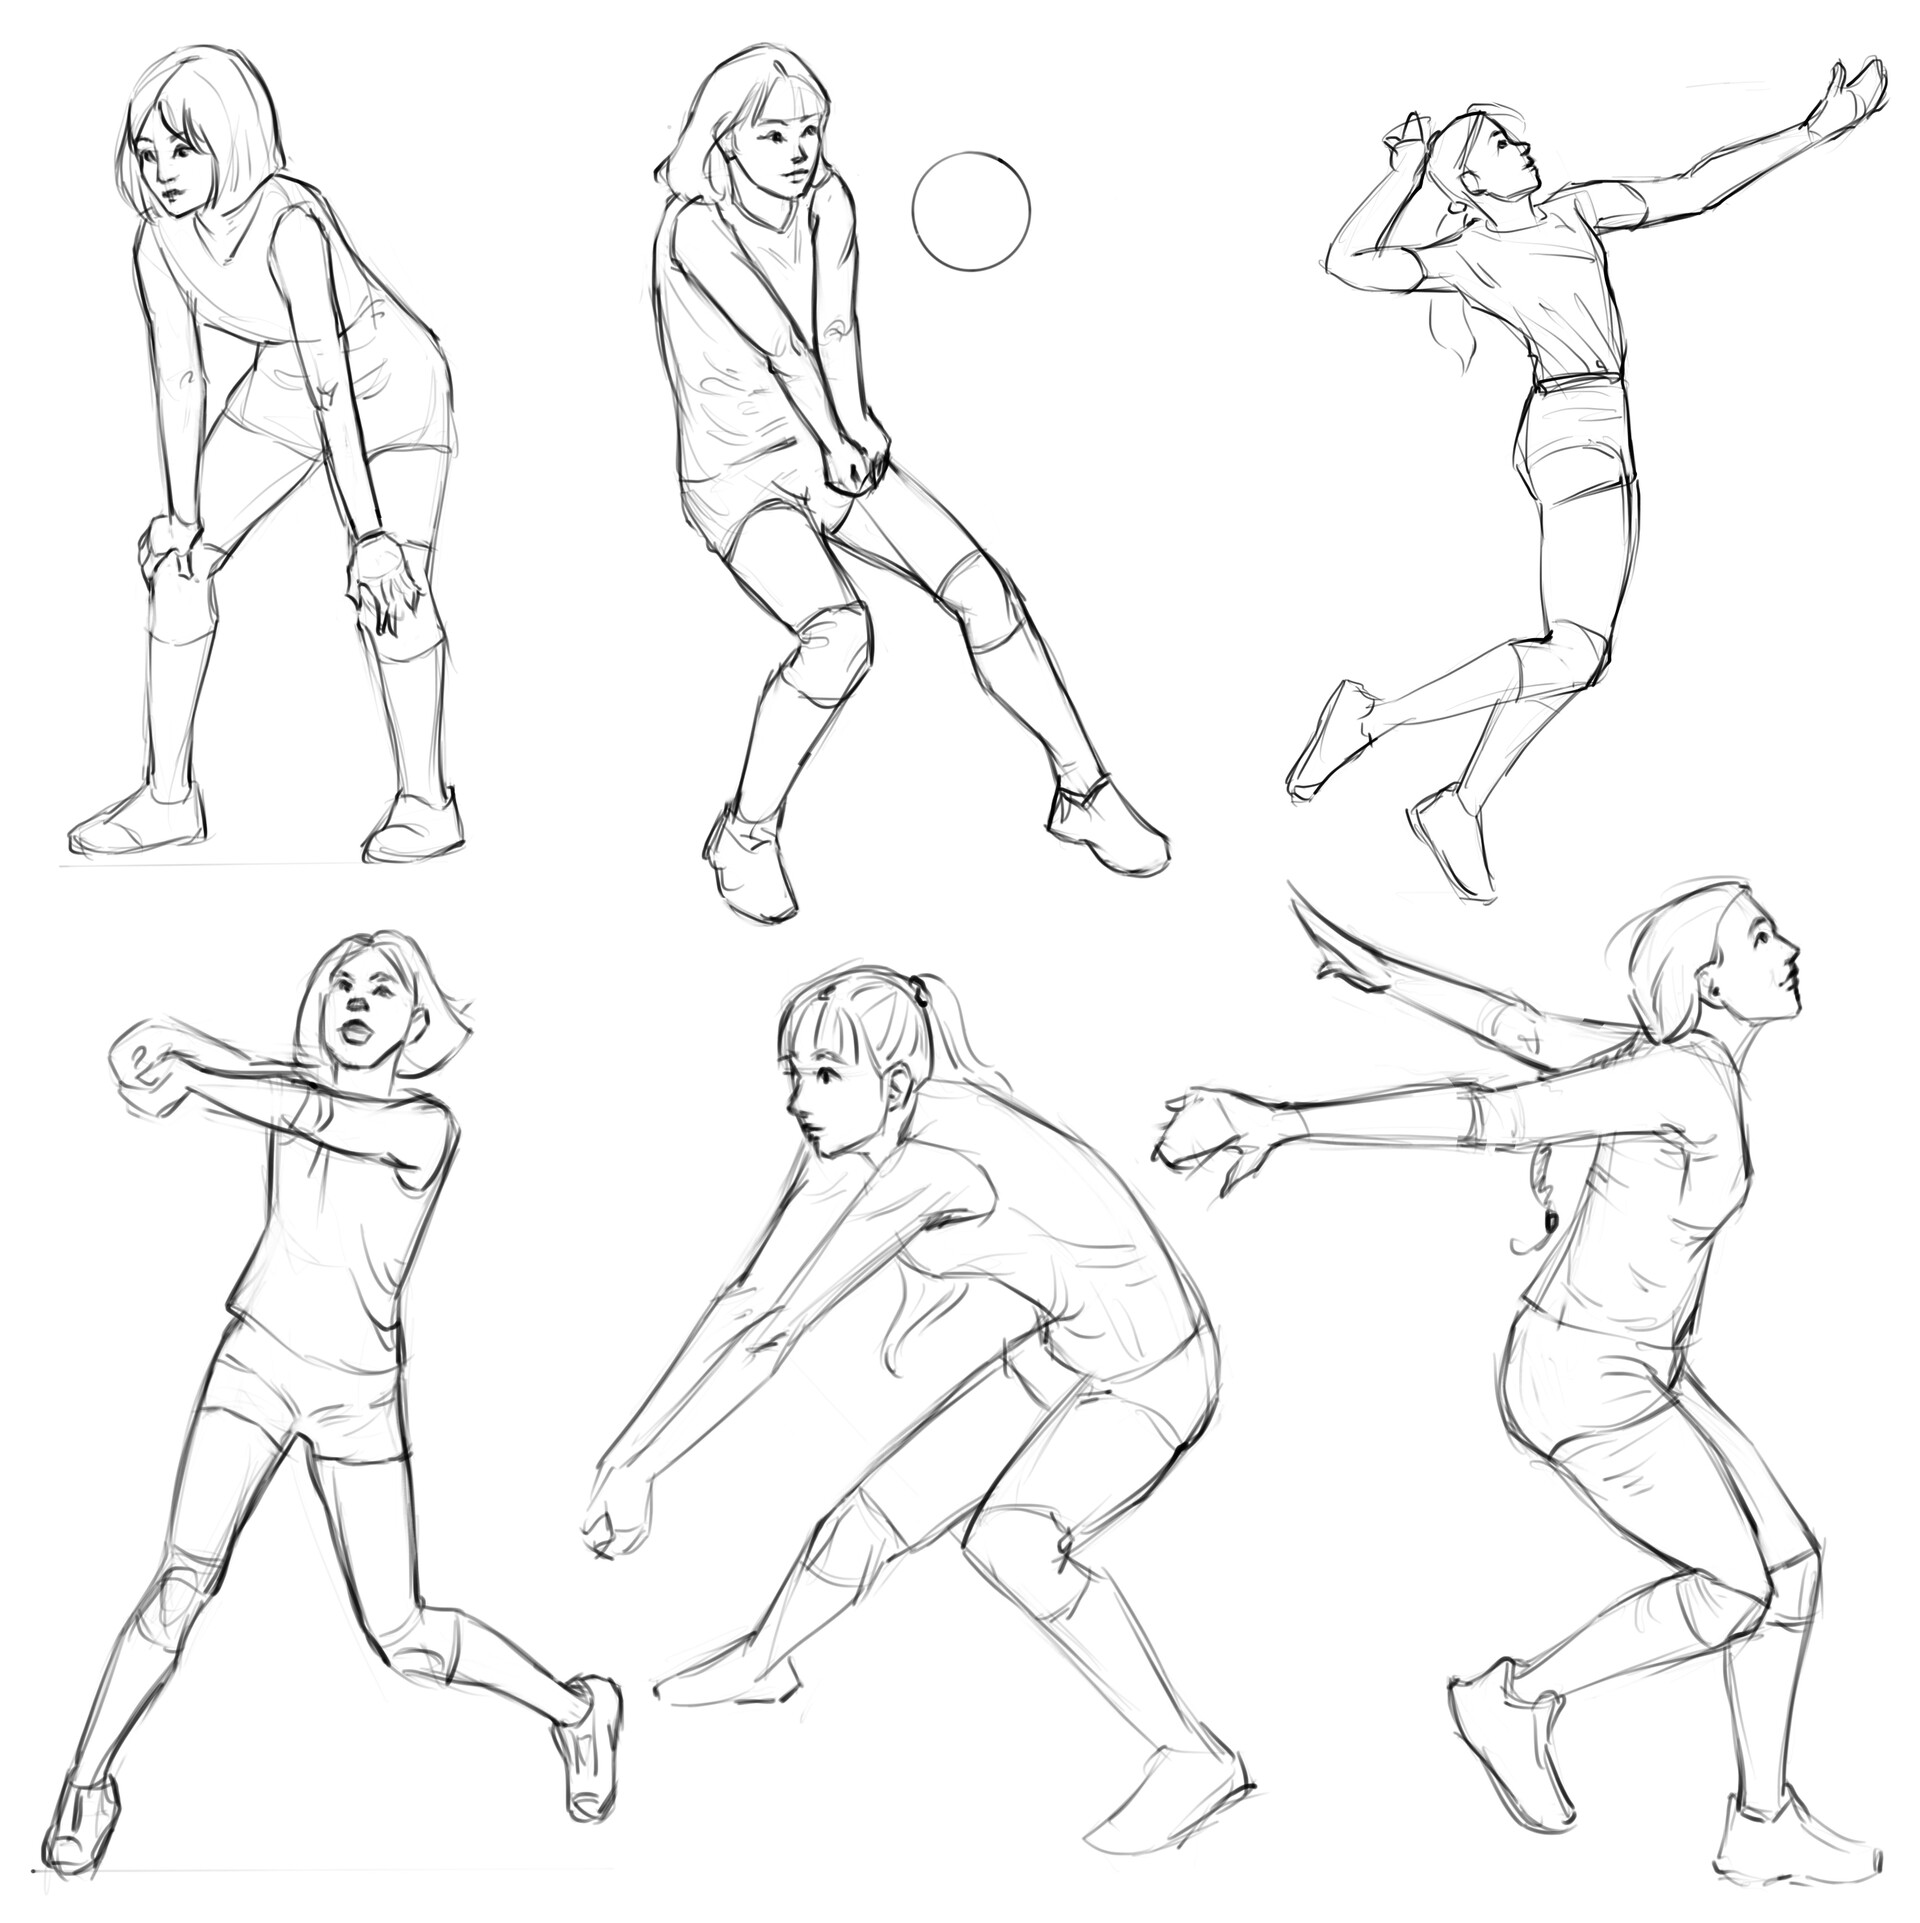 ArtStation - Volleyball players sketch